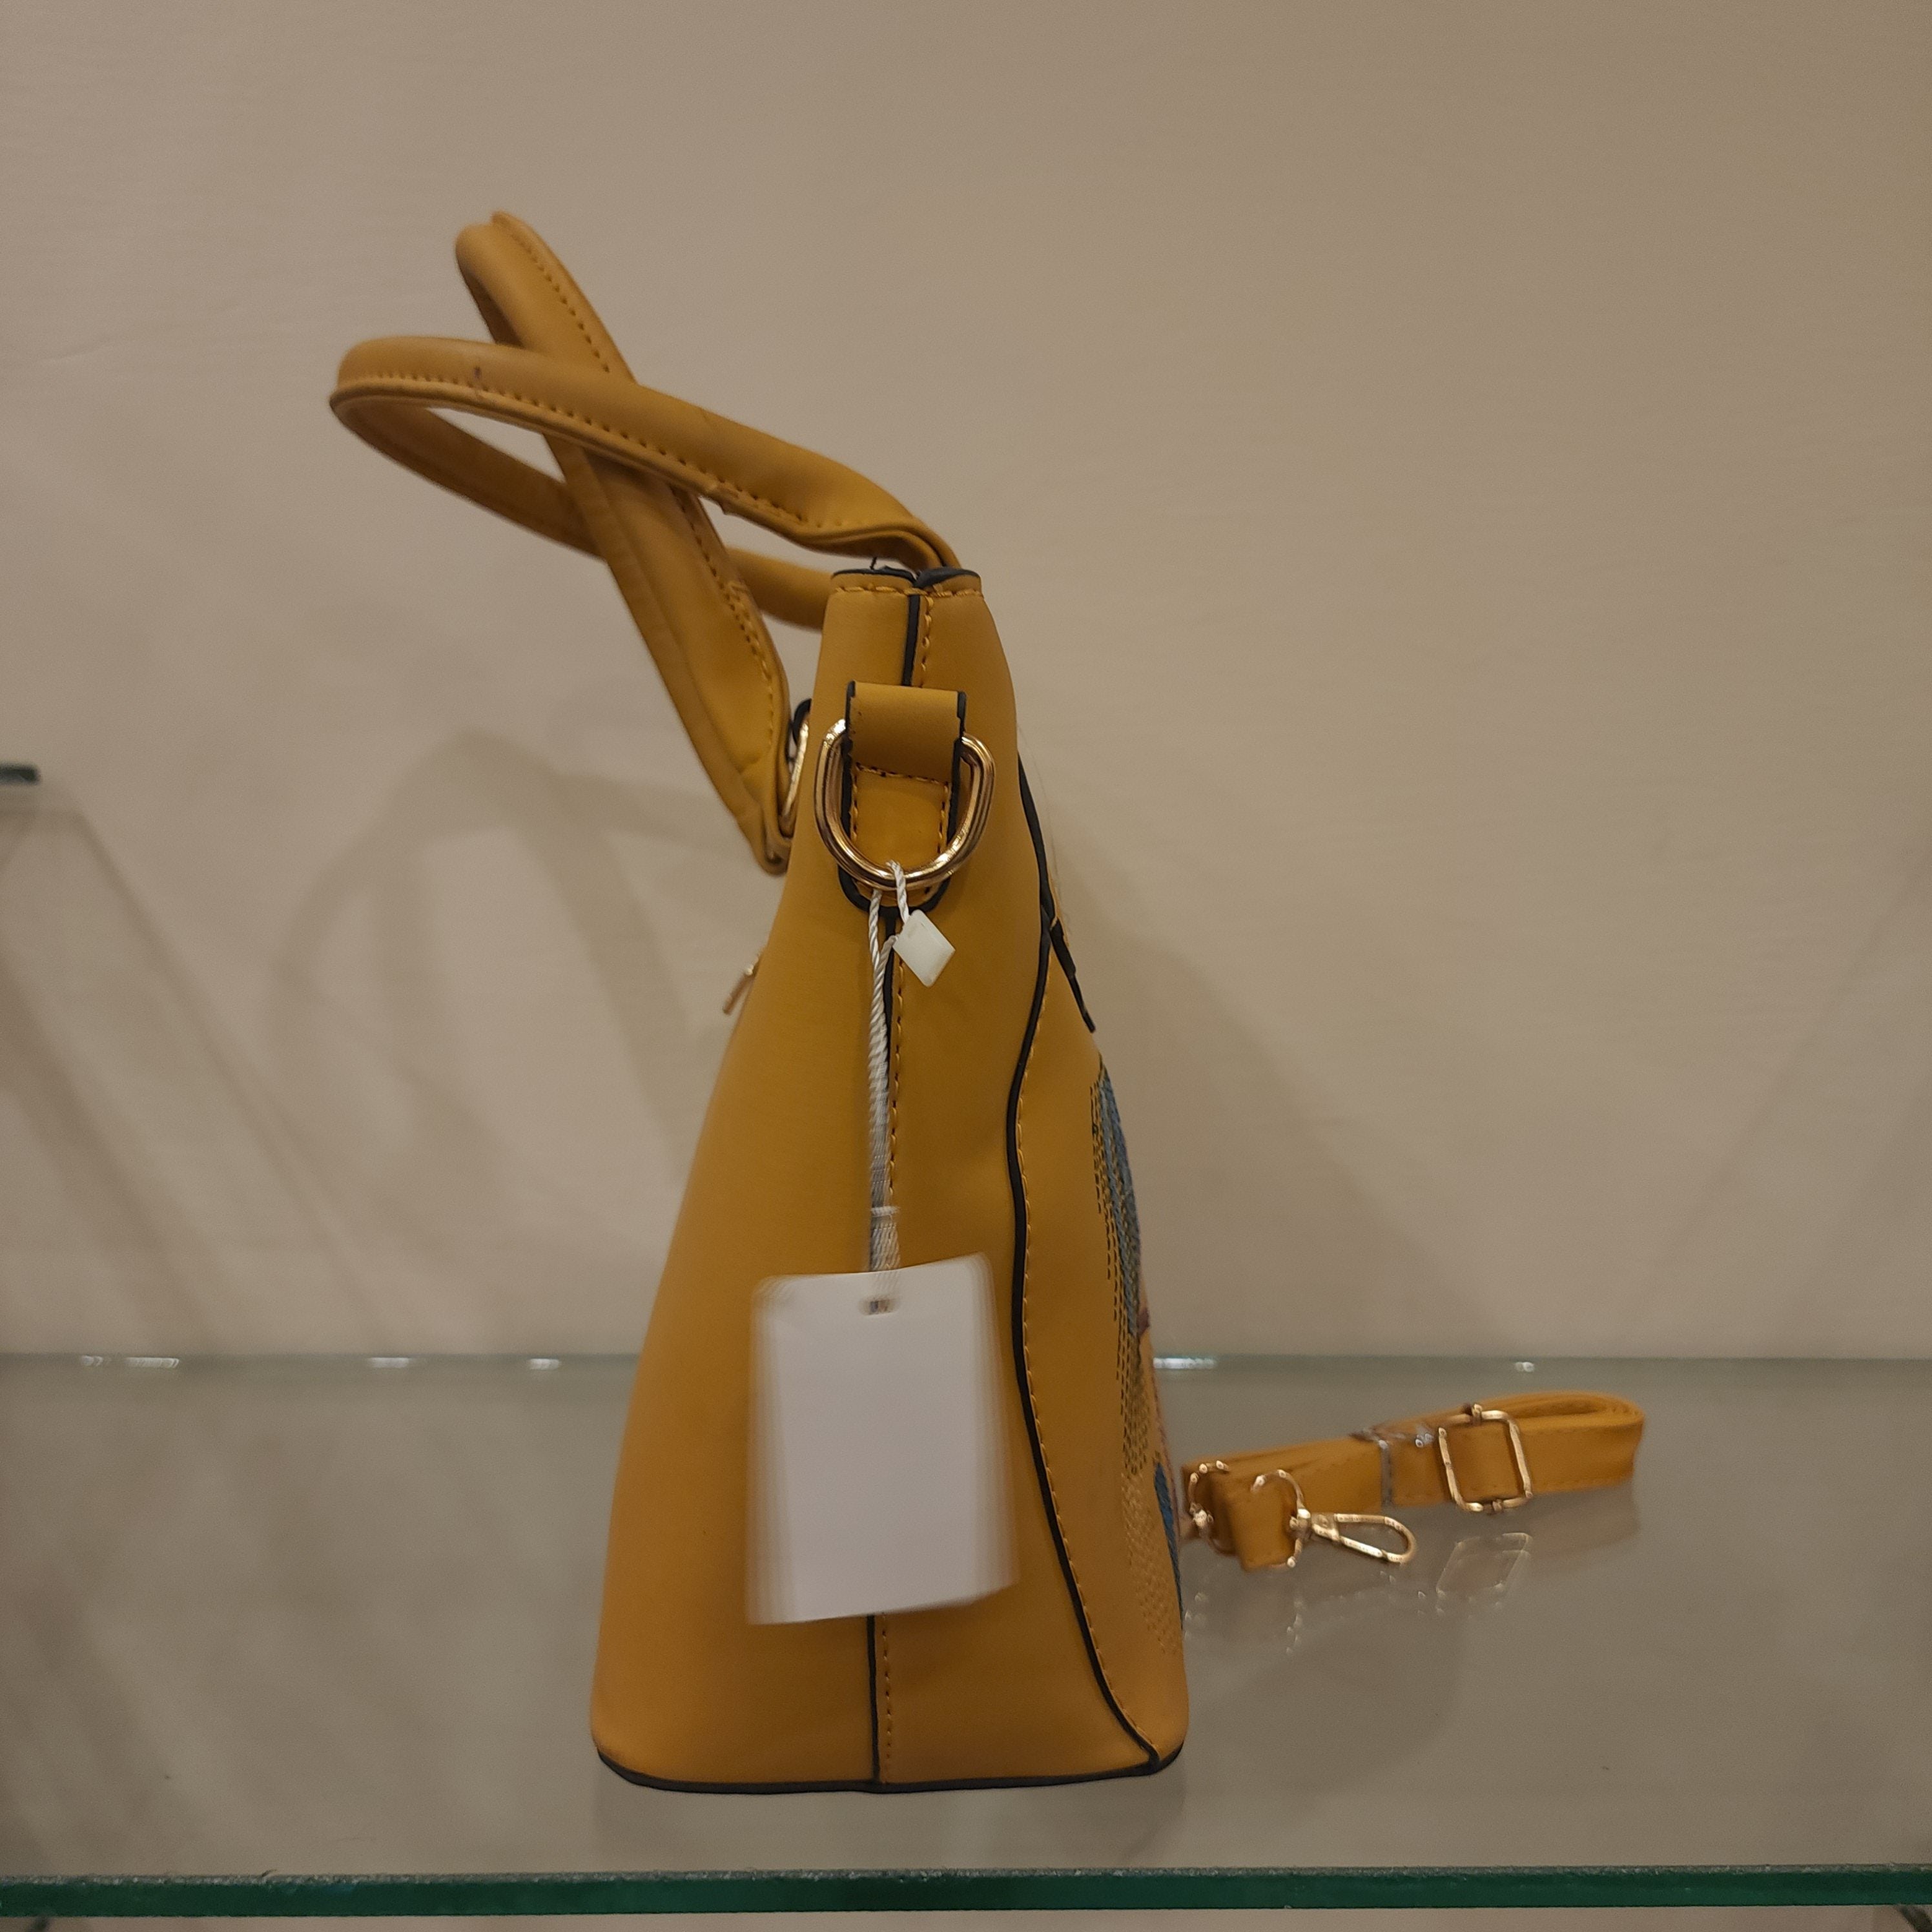 Yellow Handbag - Maha fashions -  